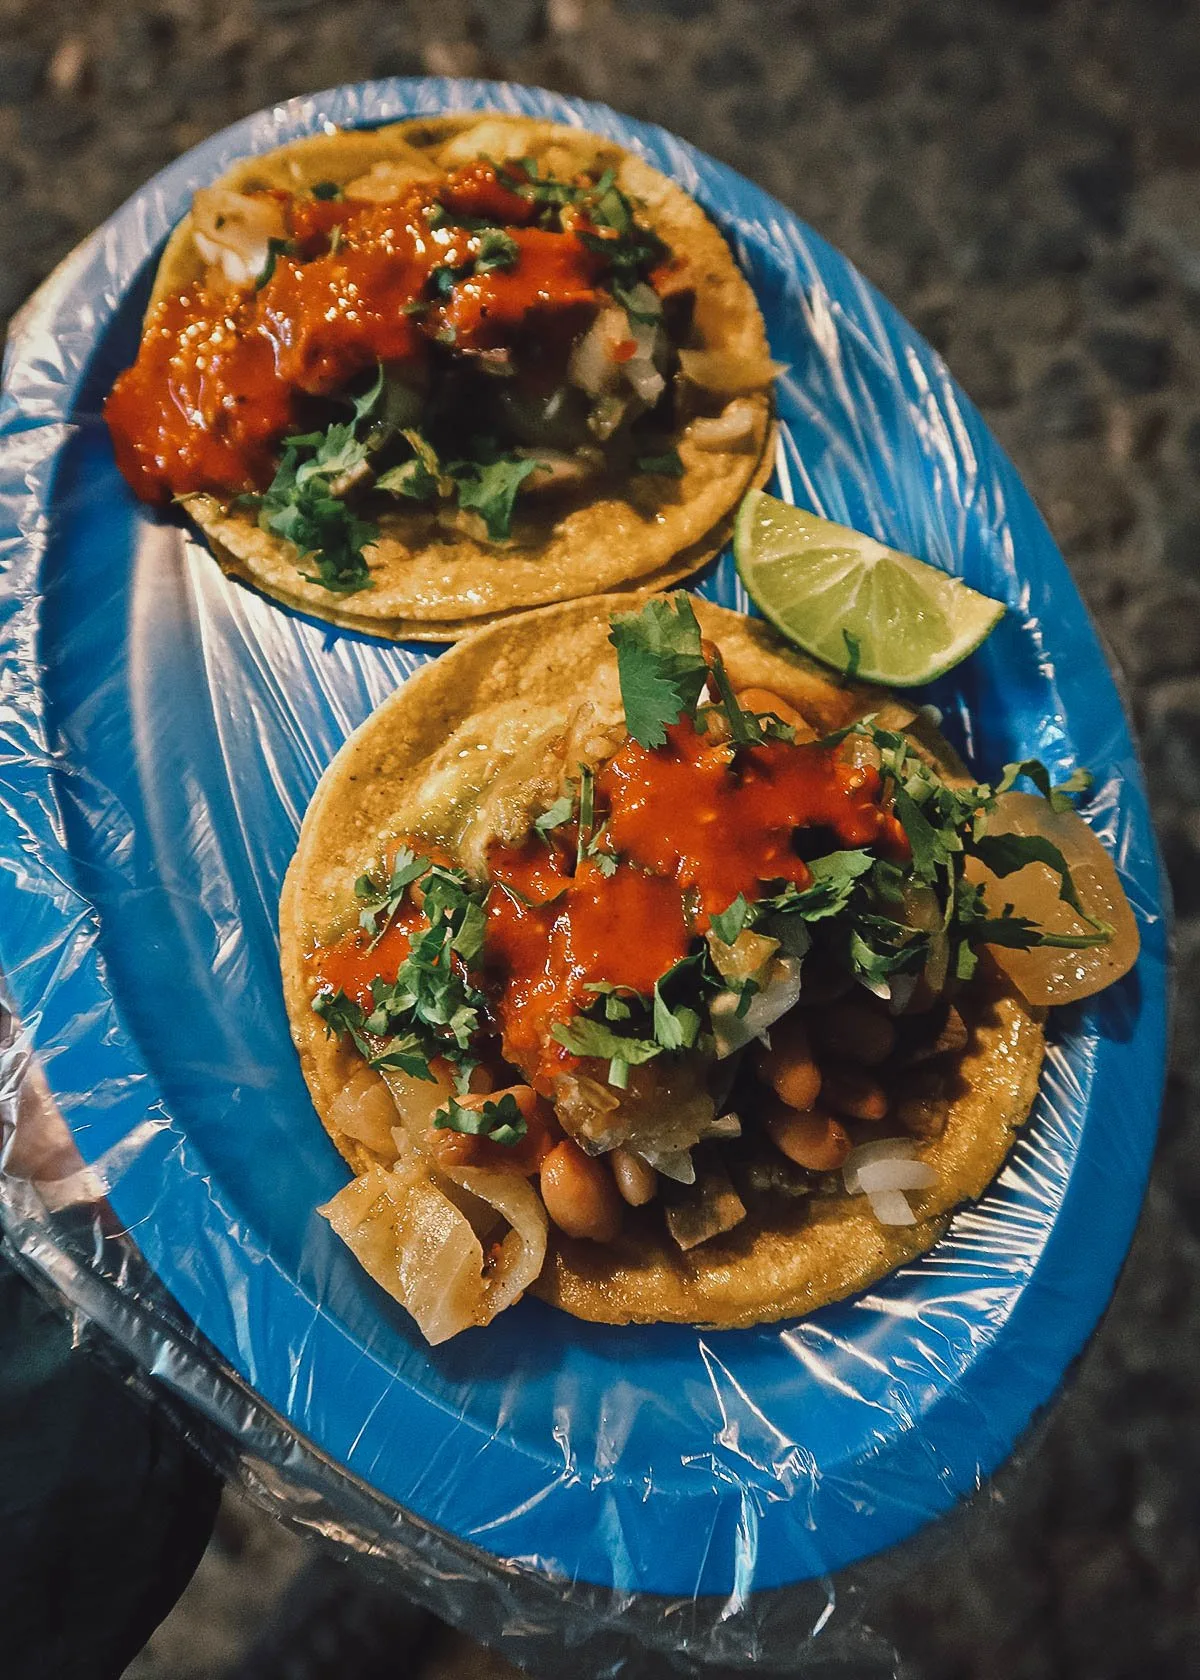 Tacos de lengua from a roadside stand in Guanajuato